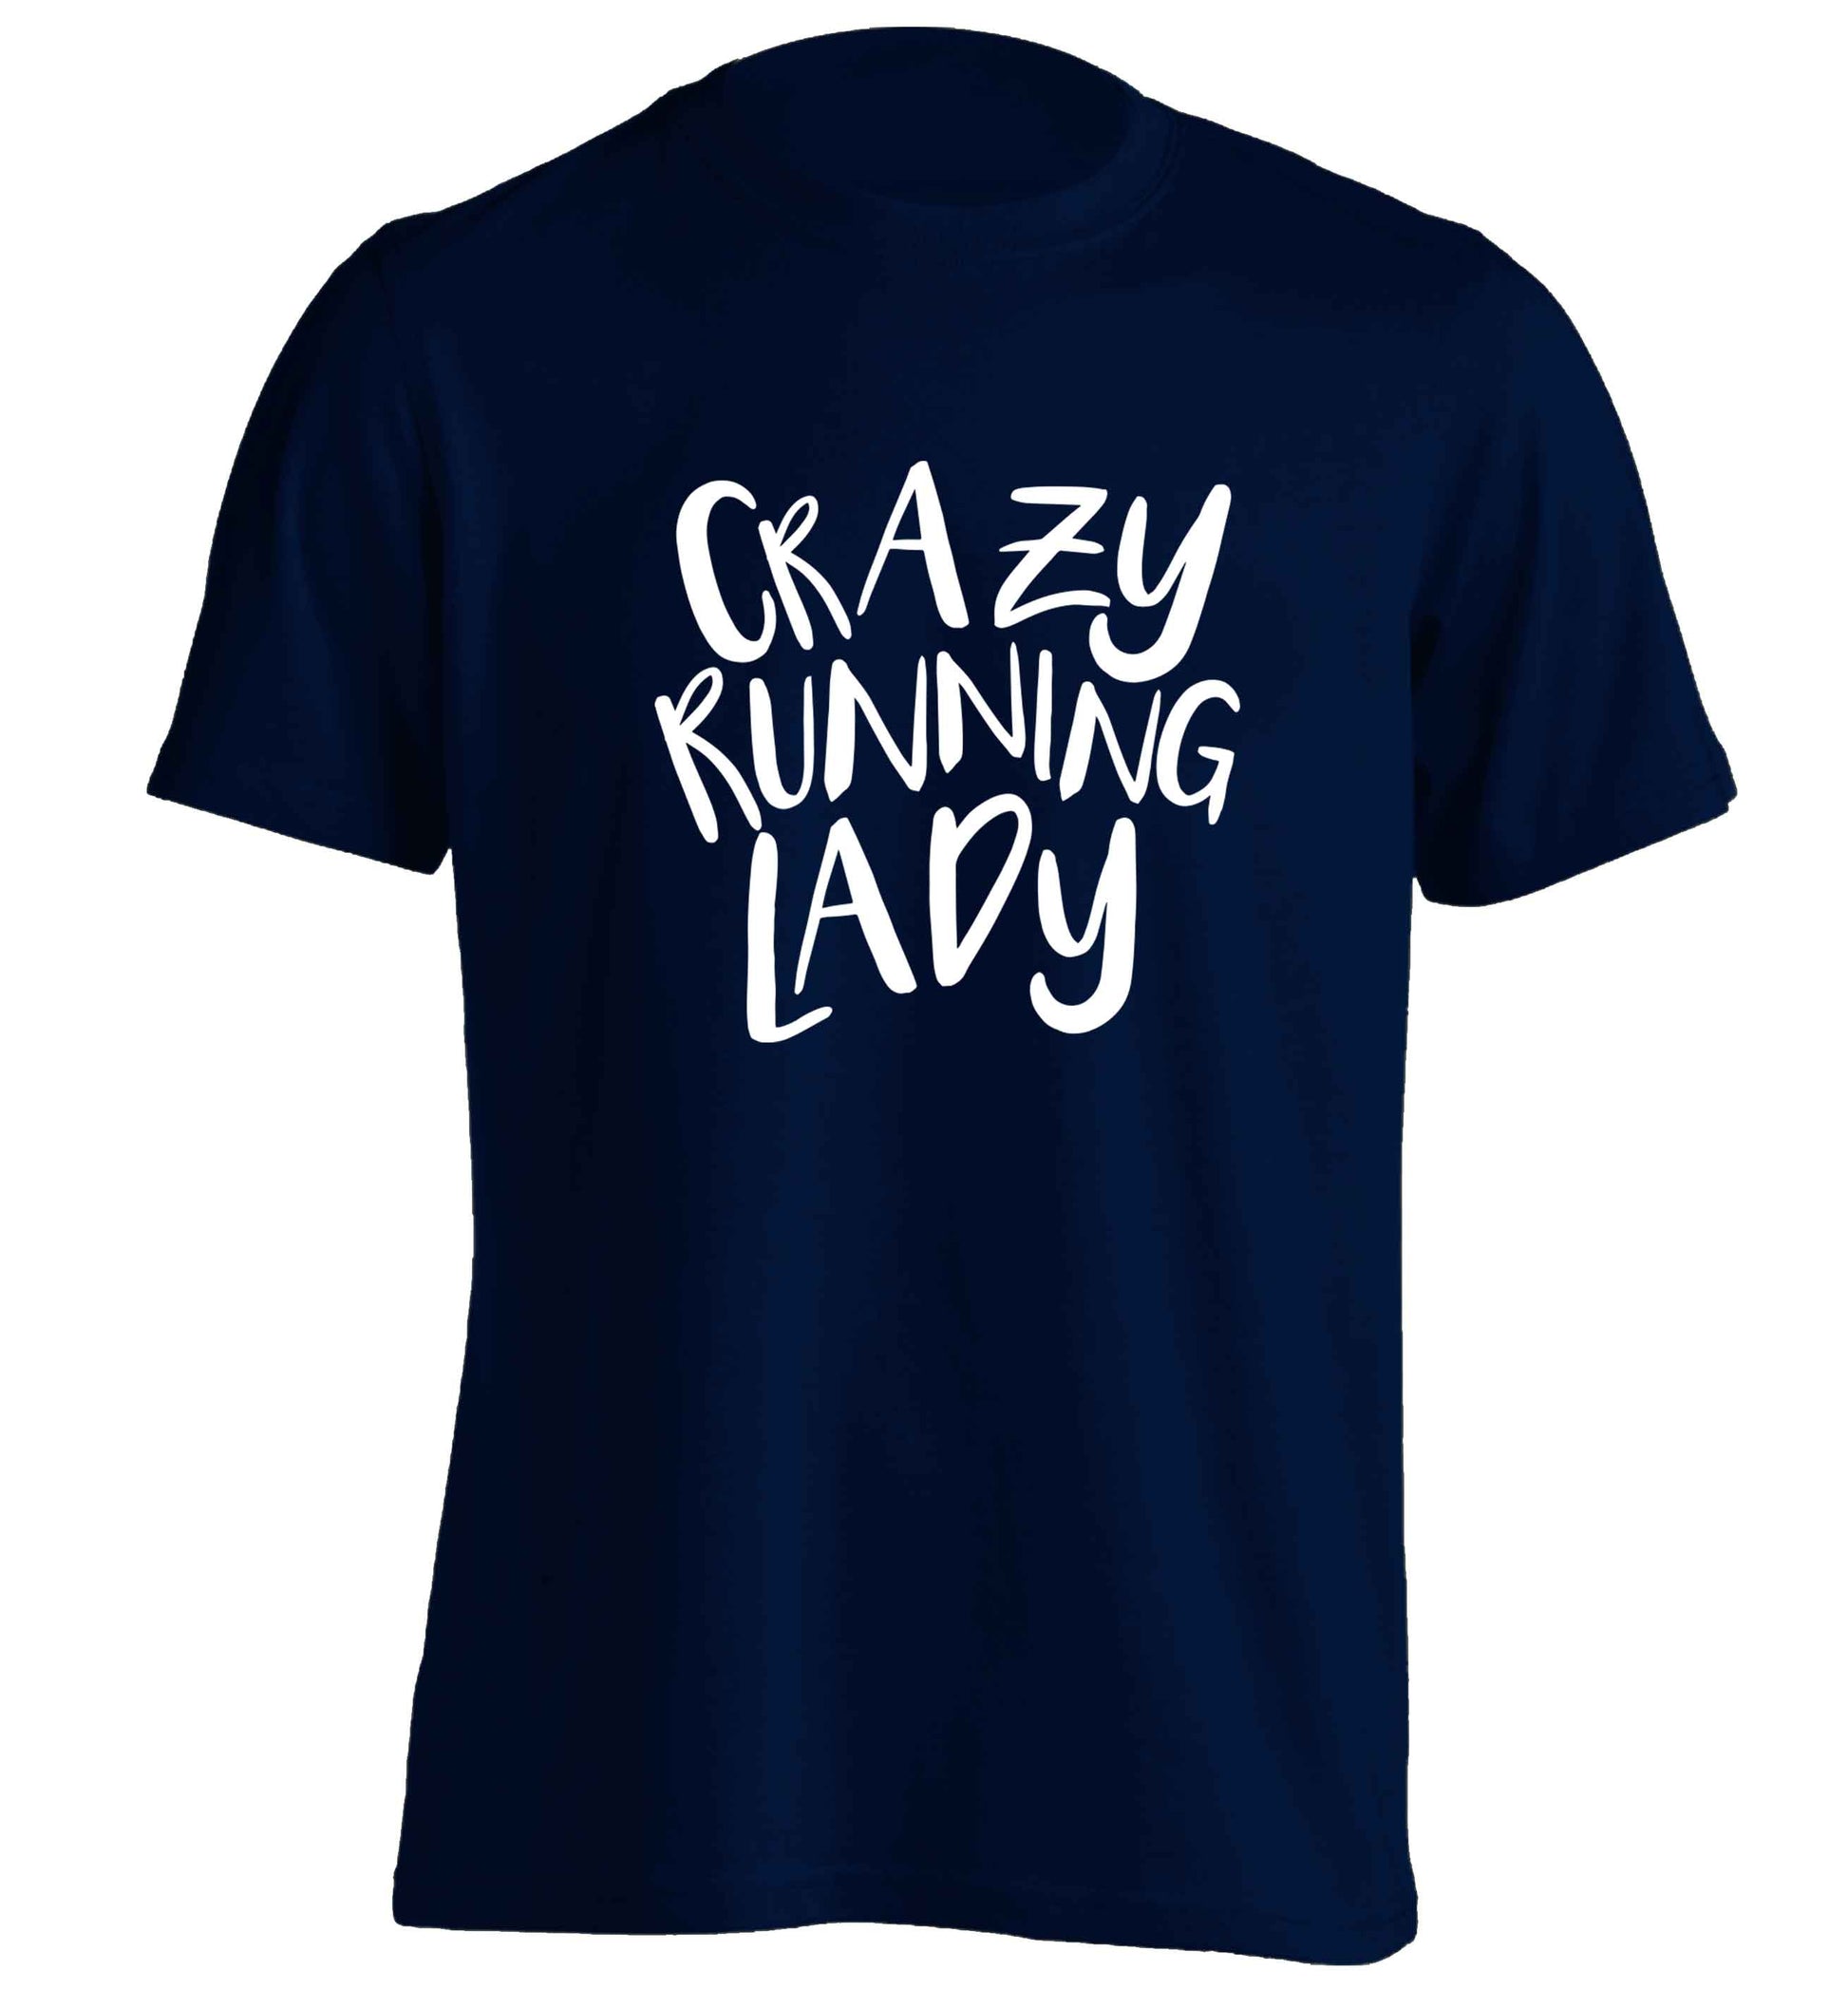 Crazy running lady adults unisex navy Tshirt 2XL